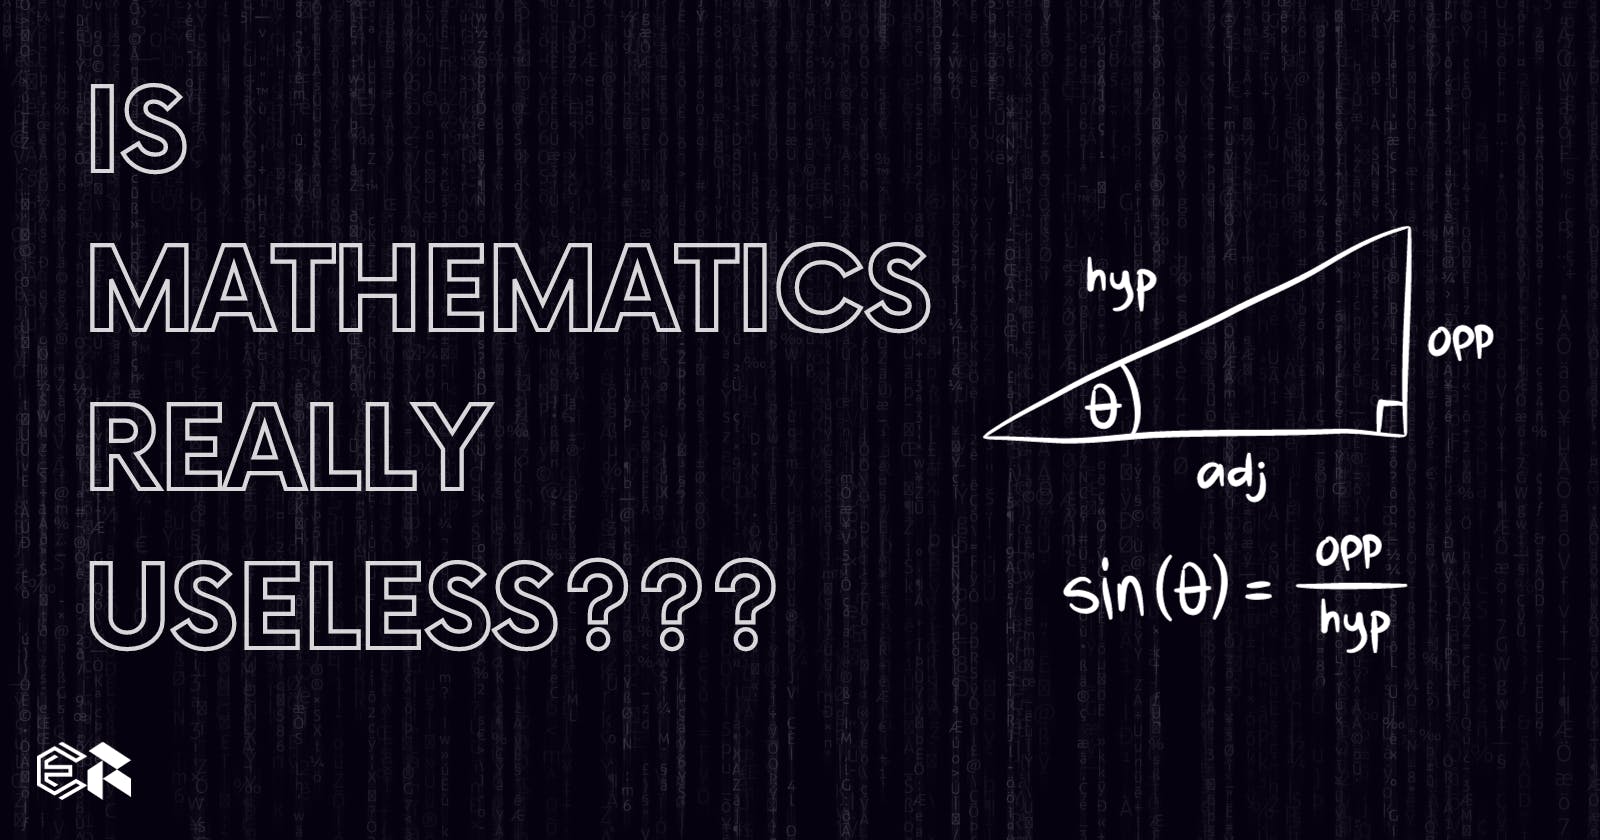 Is Mathematics Really Useless???